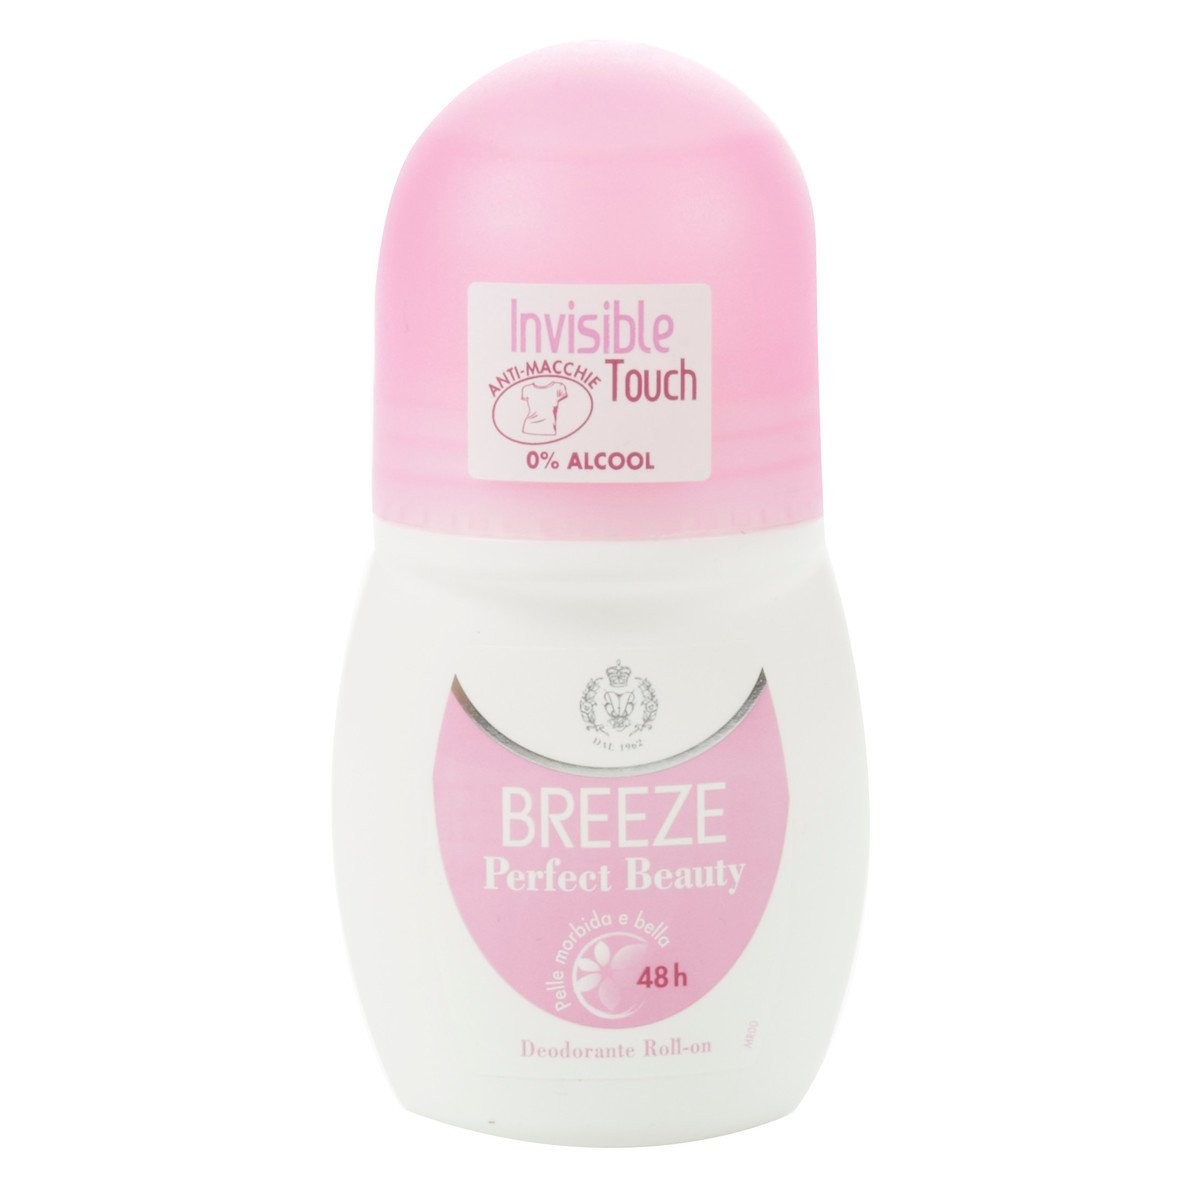 Breeze Deodorante roll on Perfect Beauty 48h